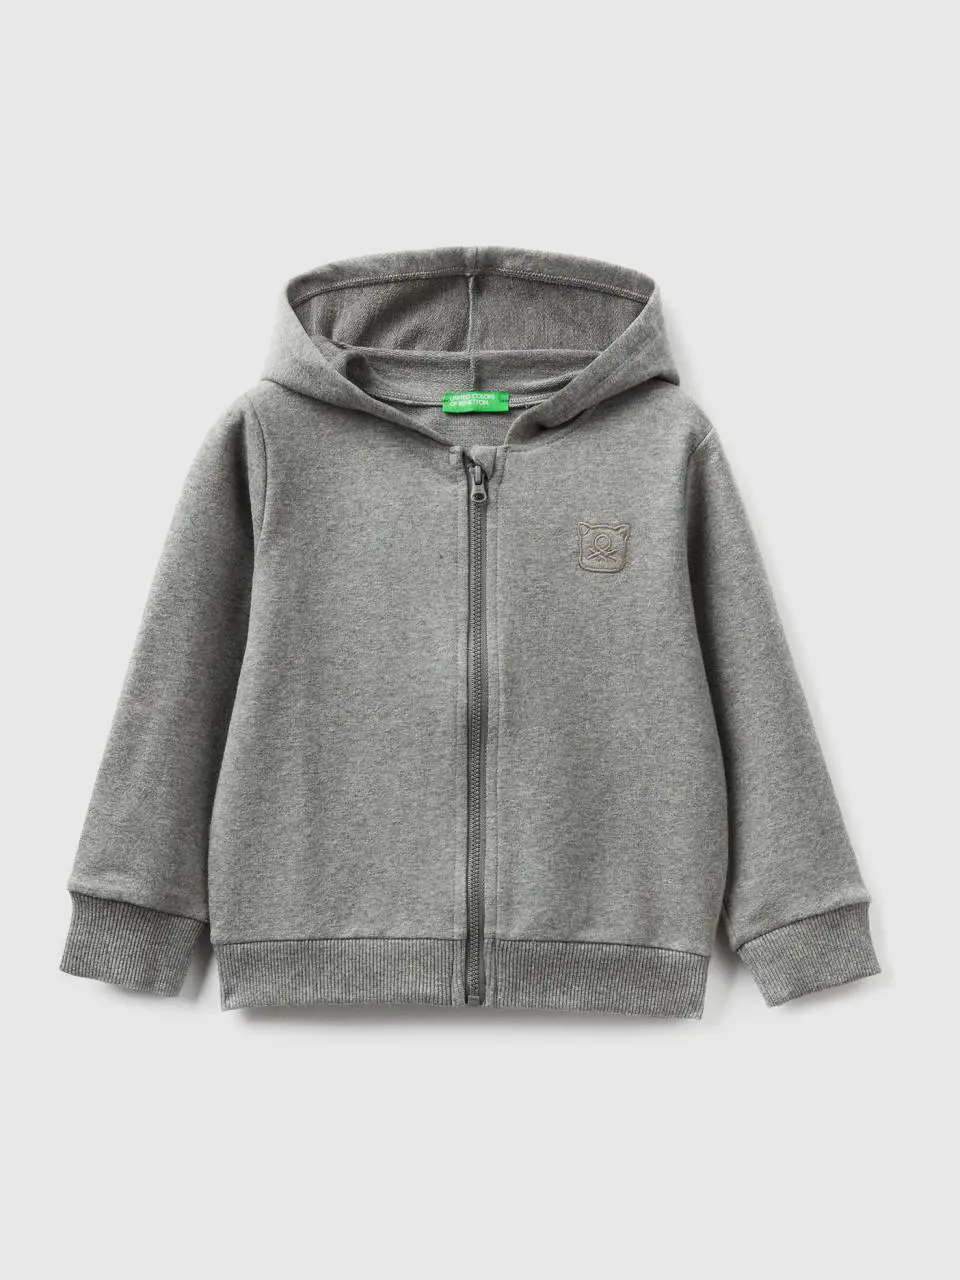 Benetton warm sweatshirt with zip and embroidered logo. 1